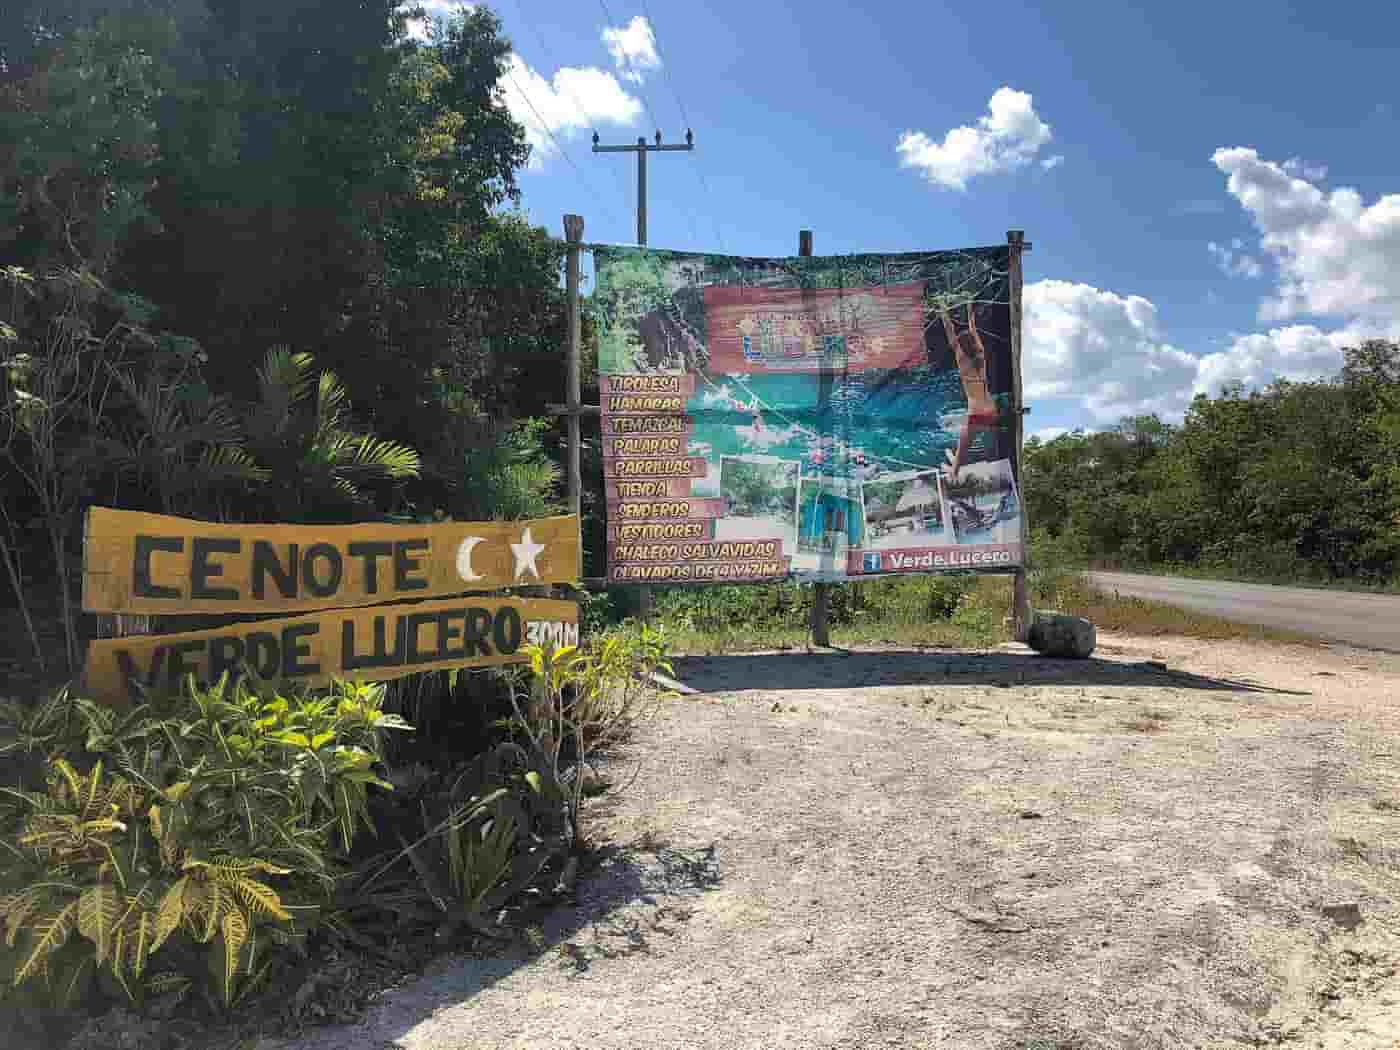 Cenote Verde Lucero señal de tráfico